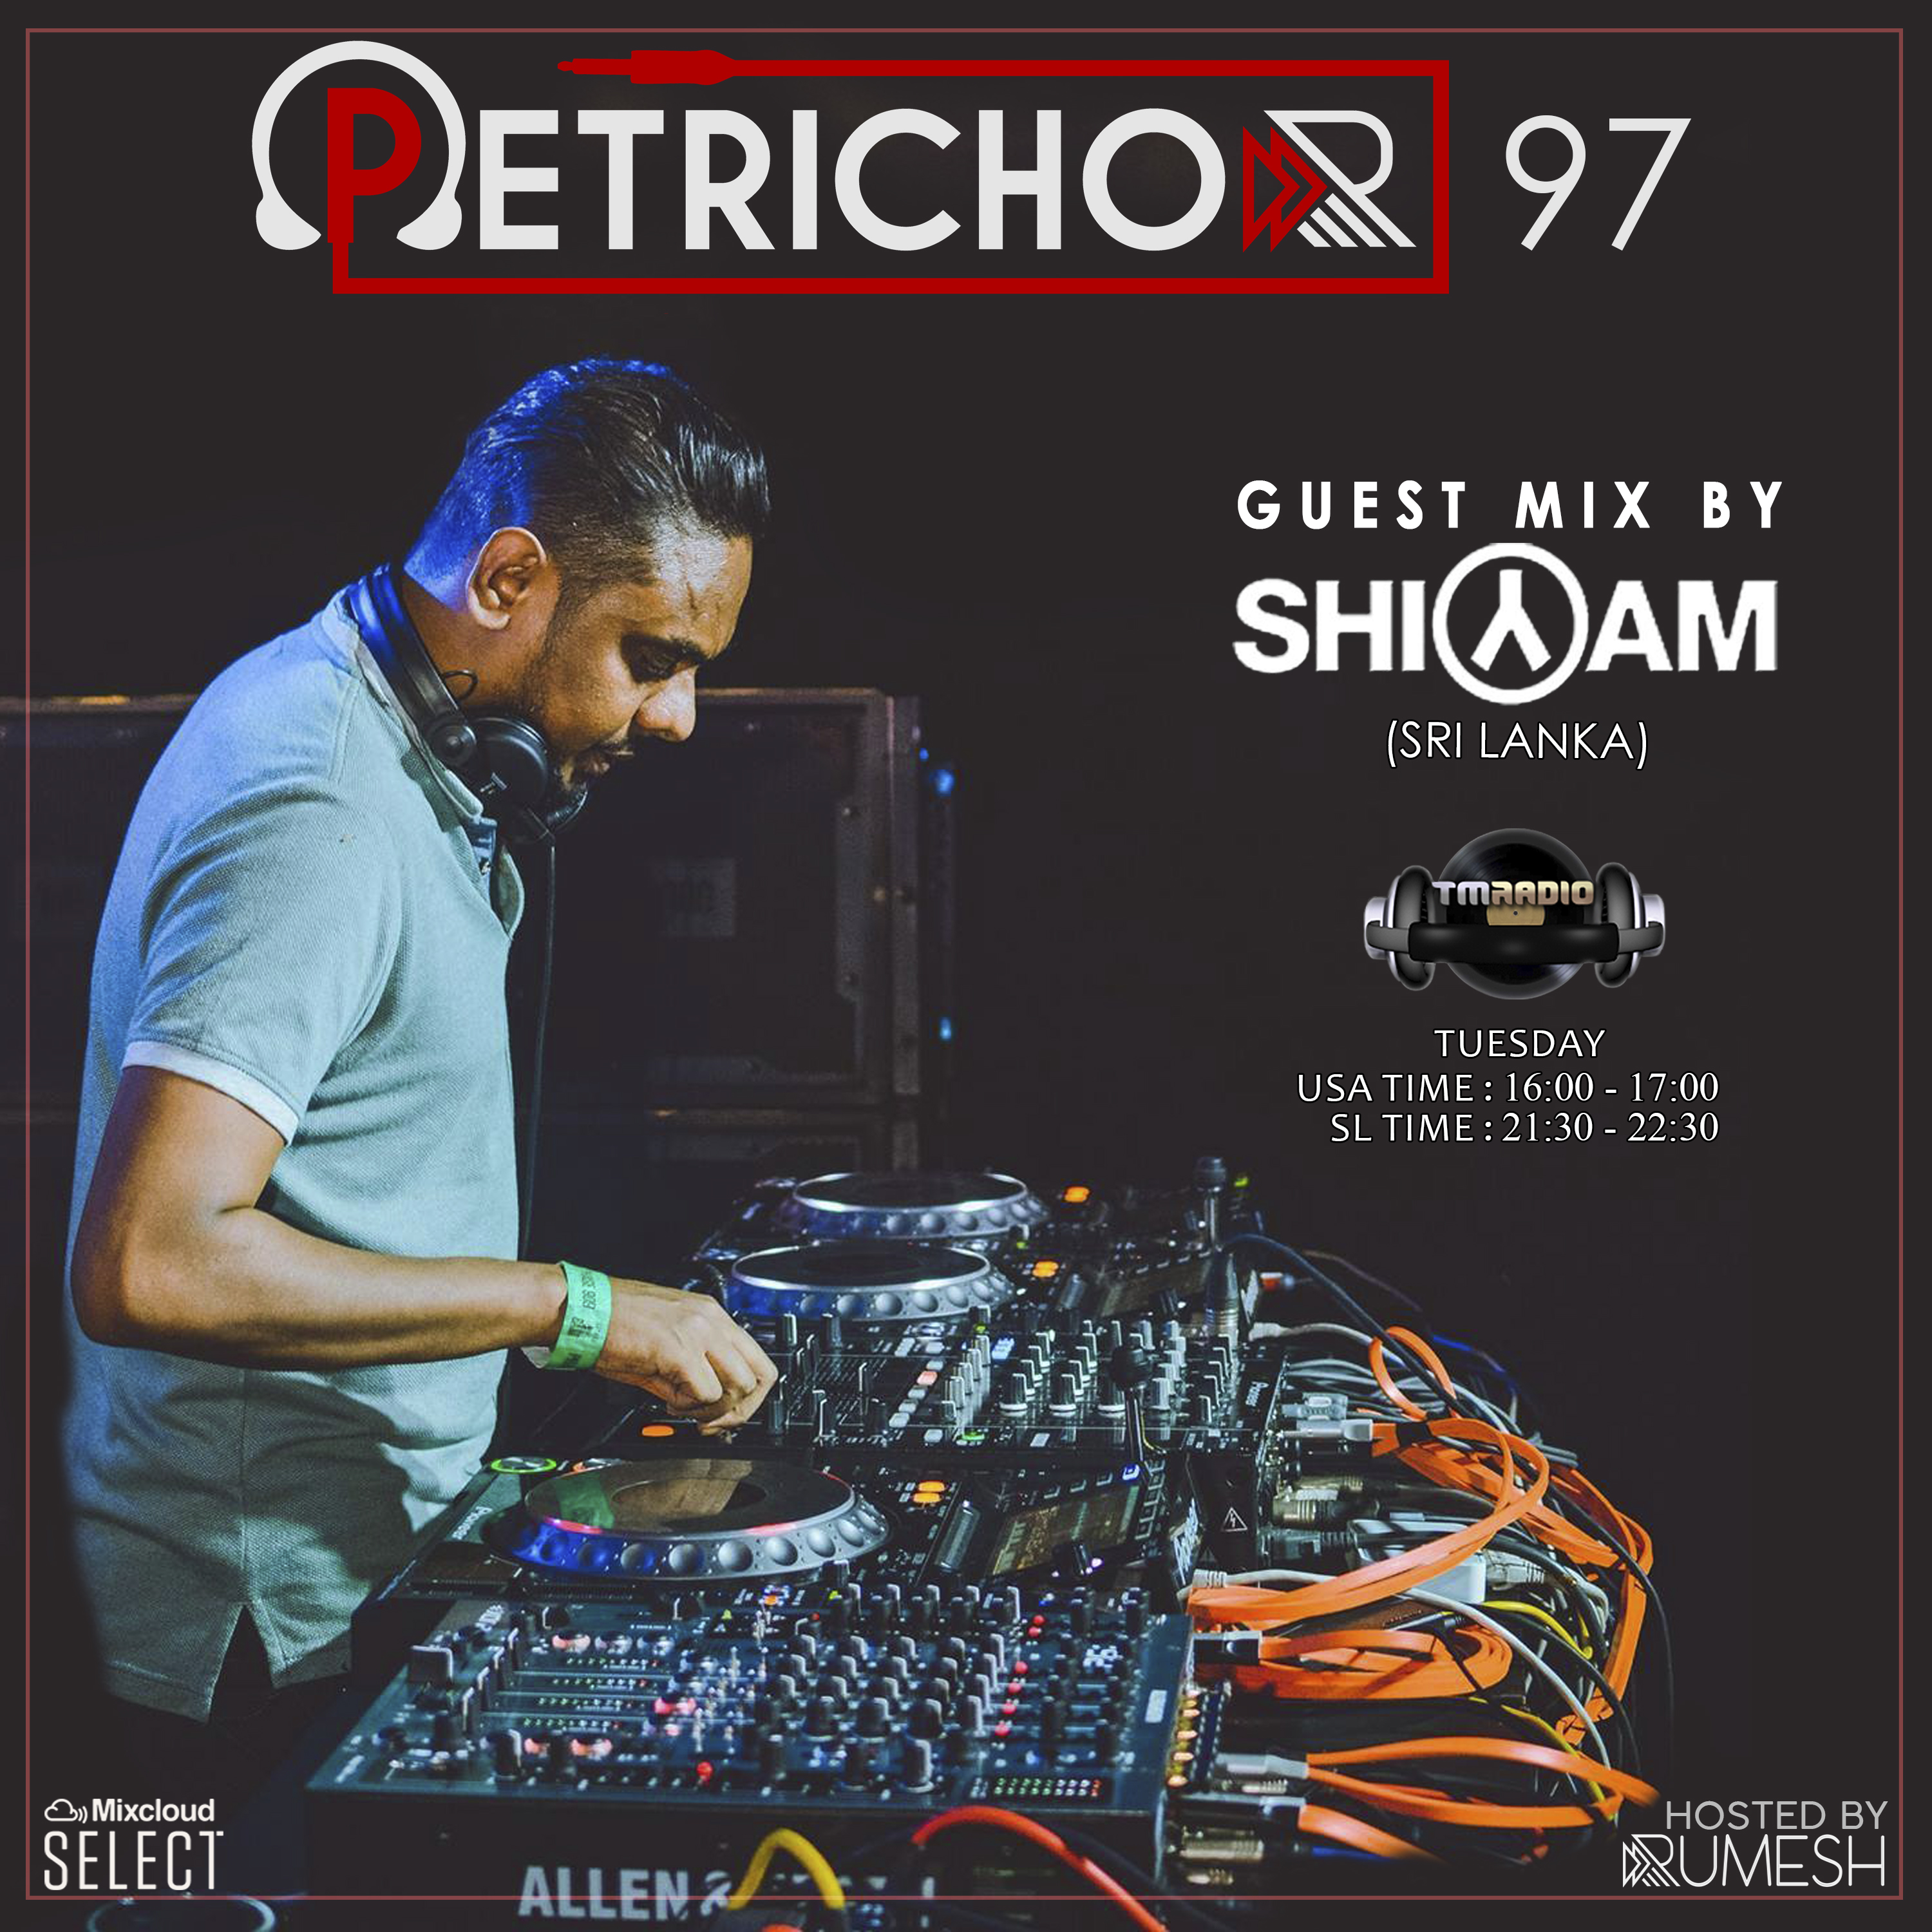 Petrichor :: Petrichor 97 guest mix by Shiyam (Sri Lanka) (aired on January 5th, 2021) banner logo